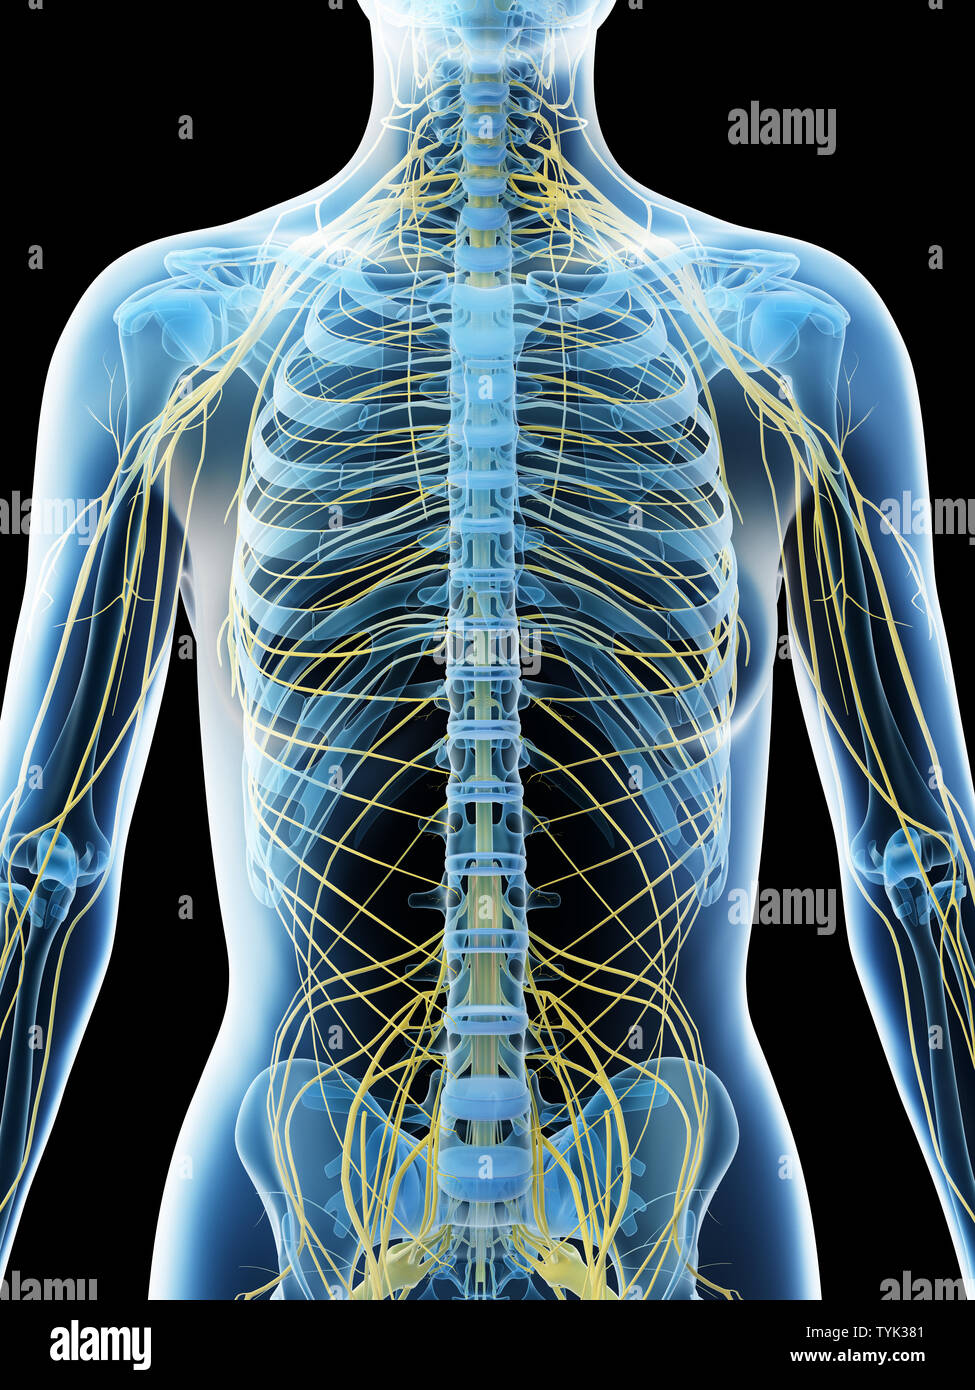 female back anatomy